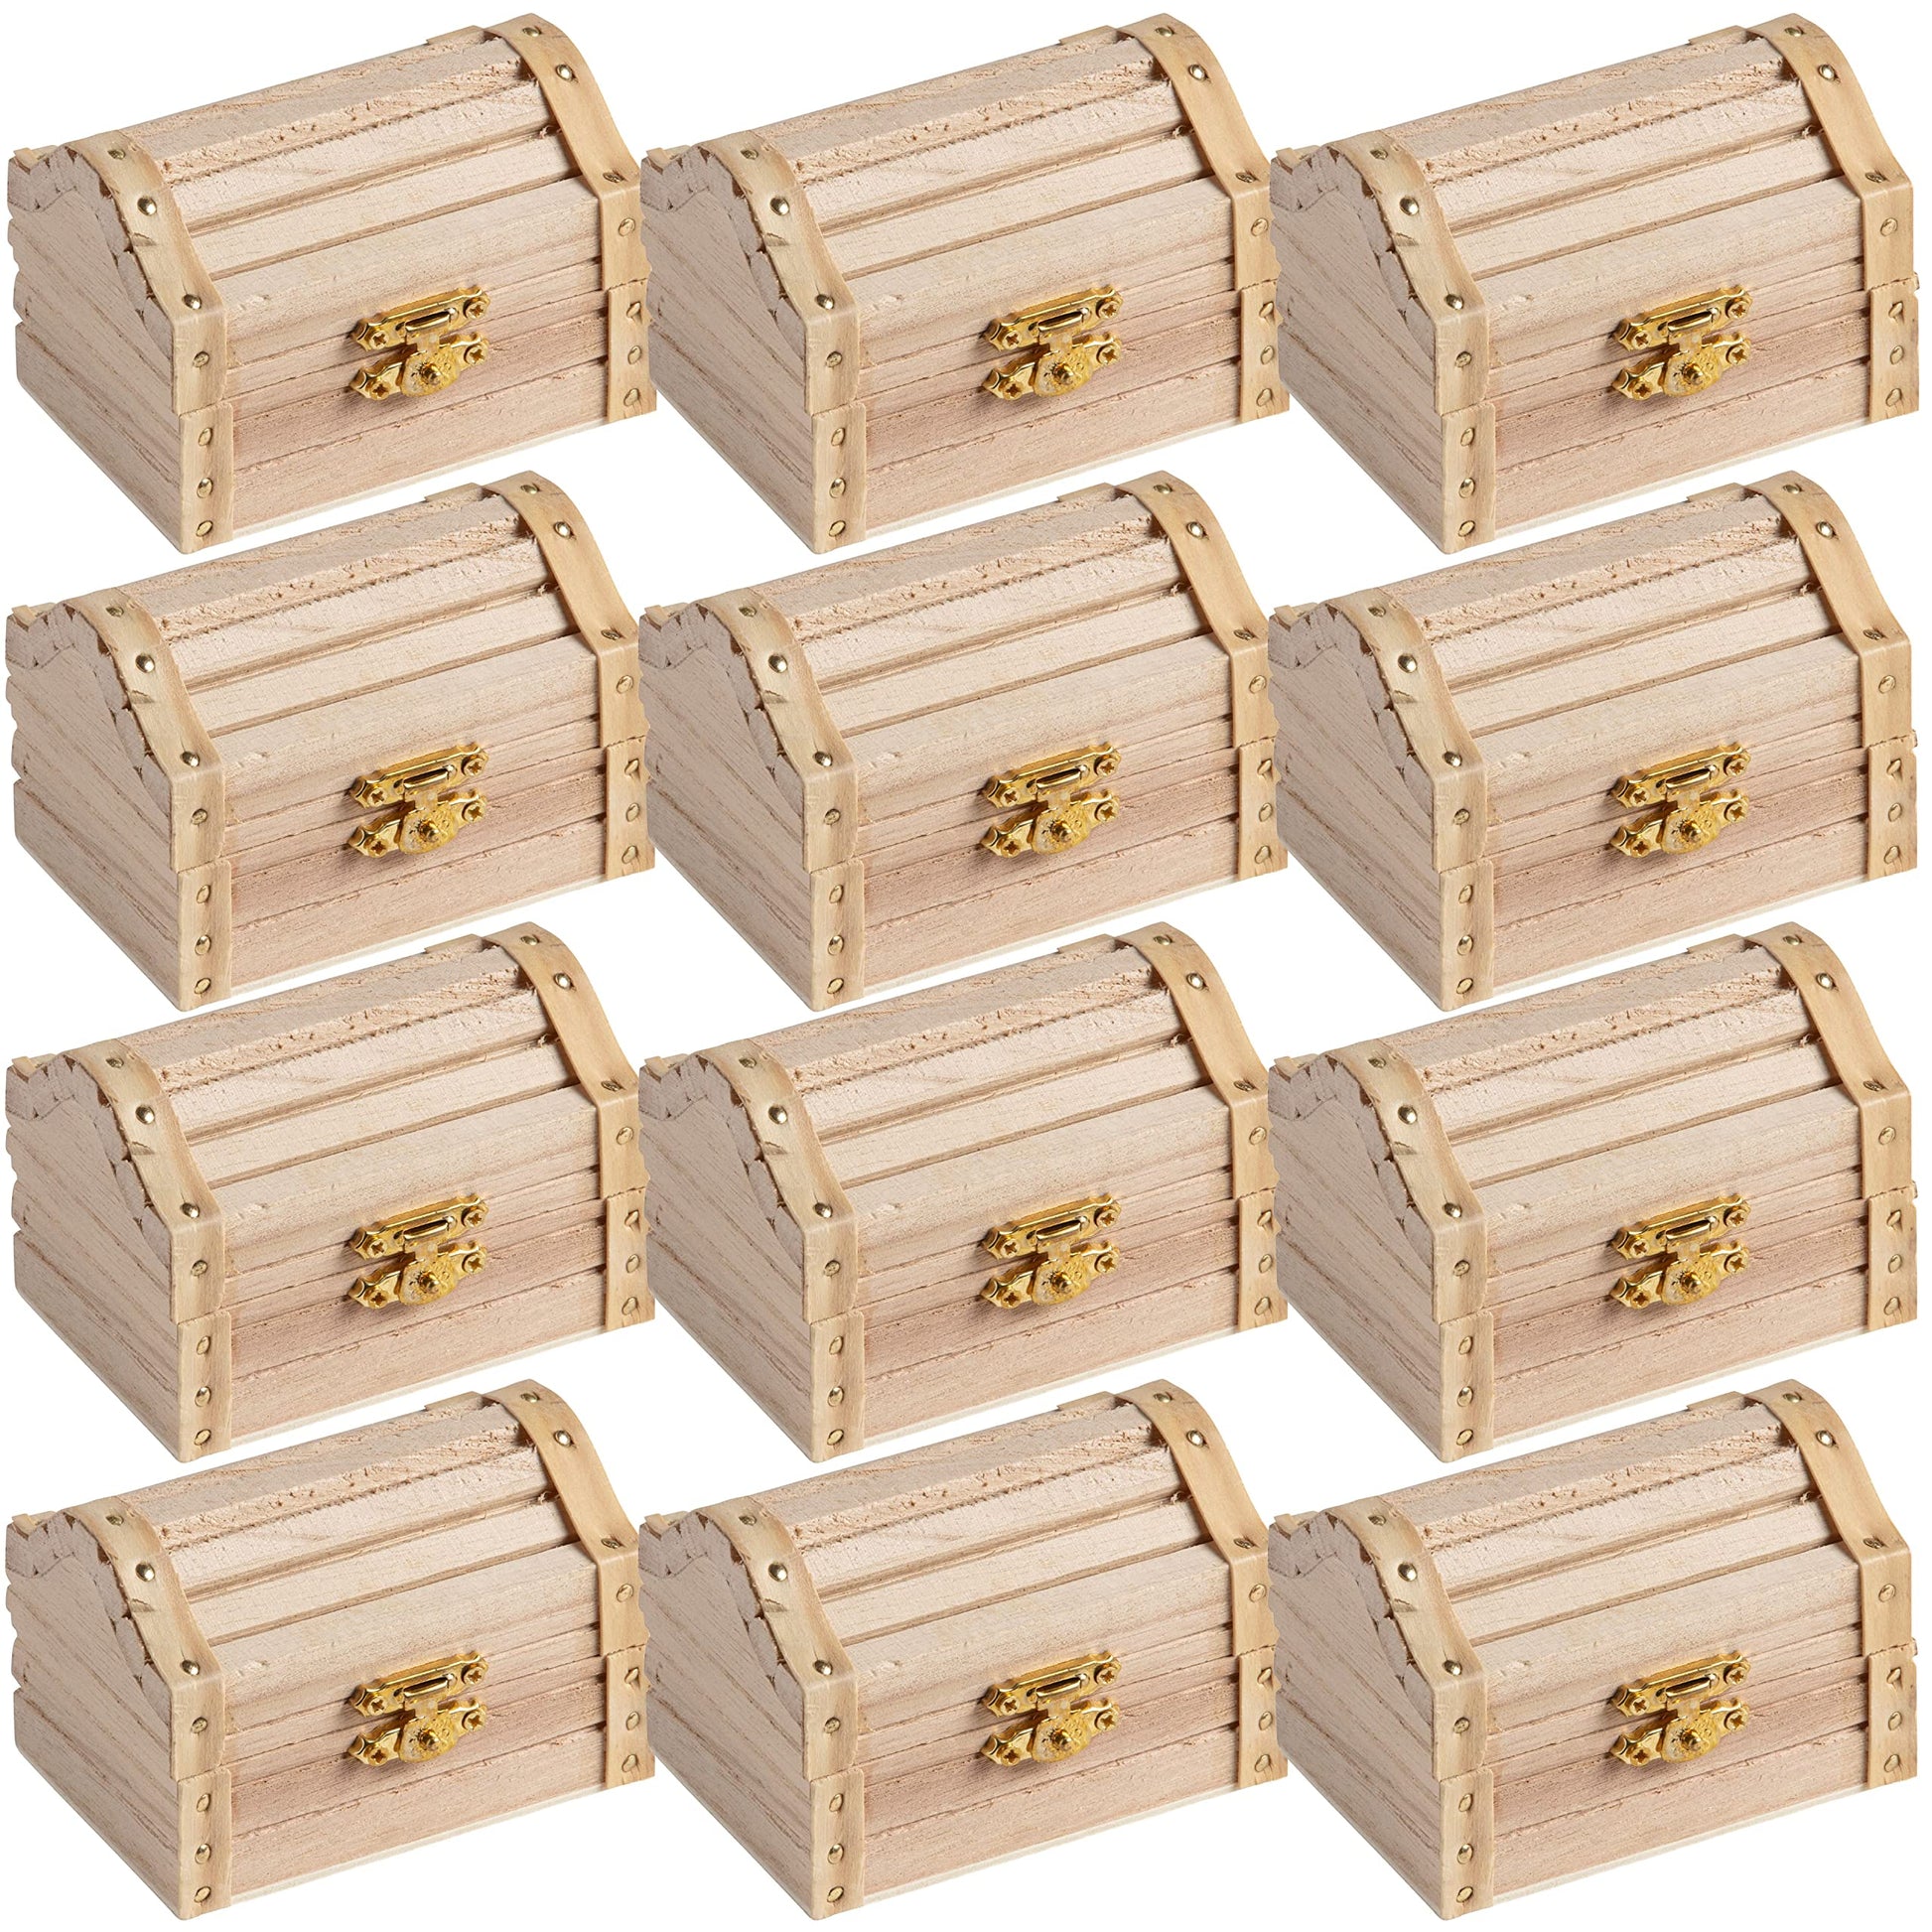 Wooden Box By Make Market®